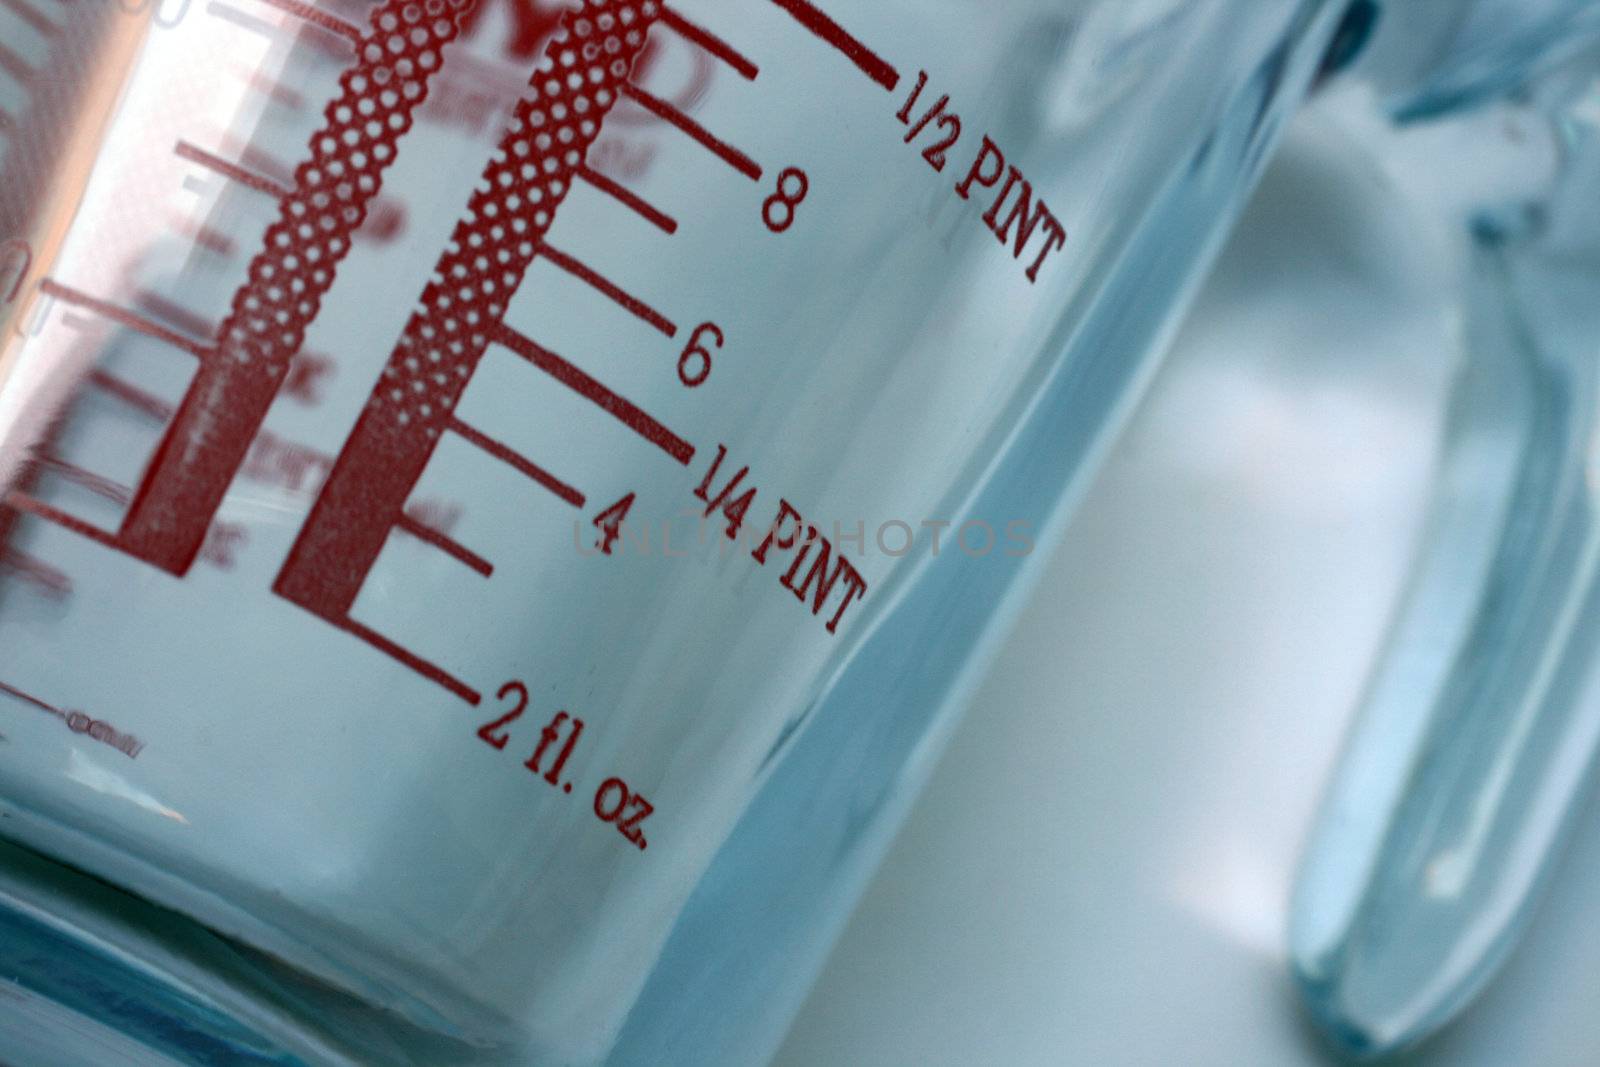 a glass jug showing pin detail to measure liquids